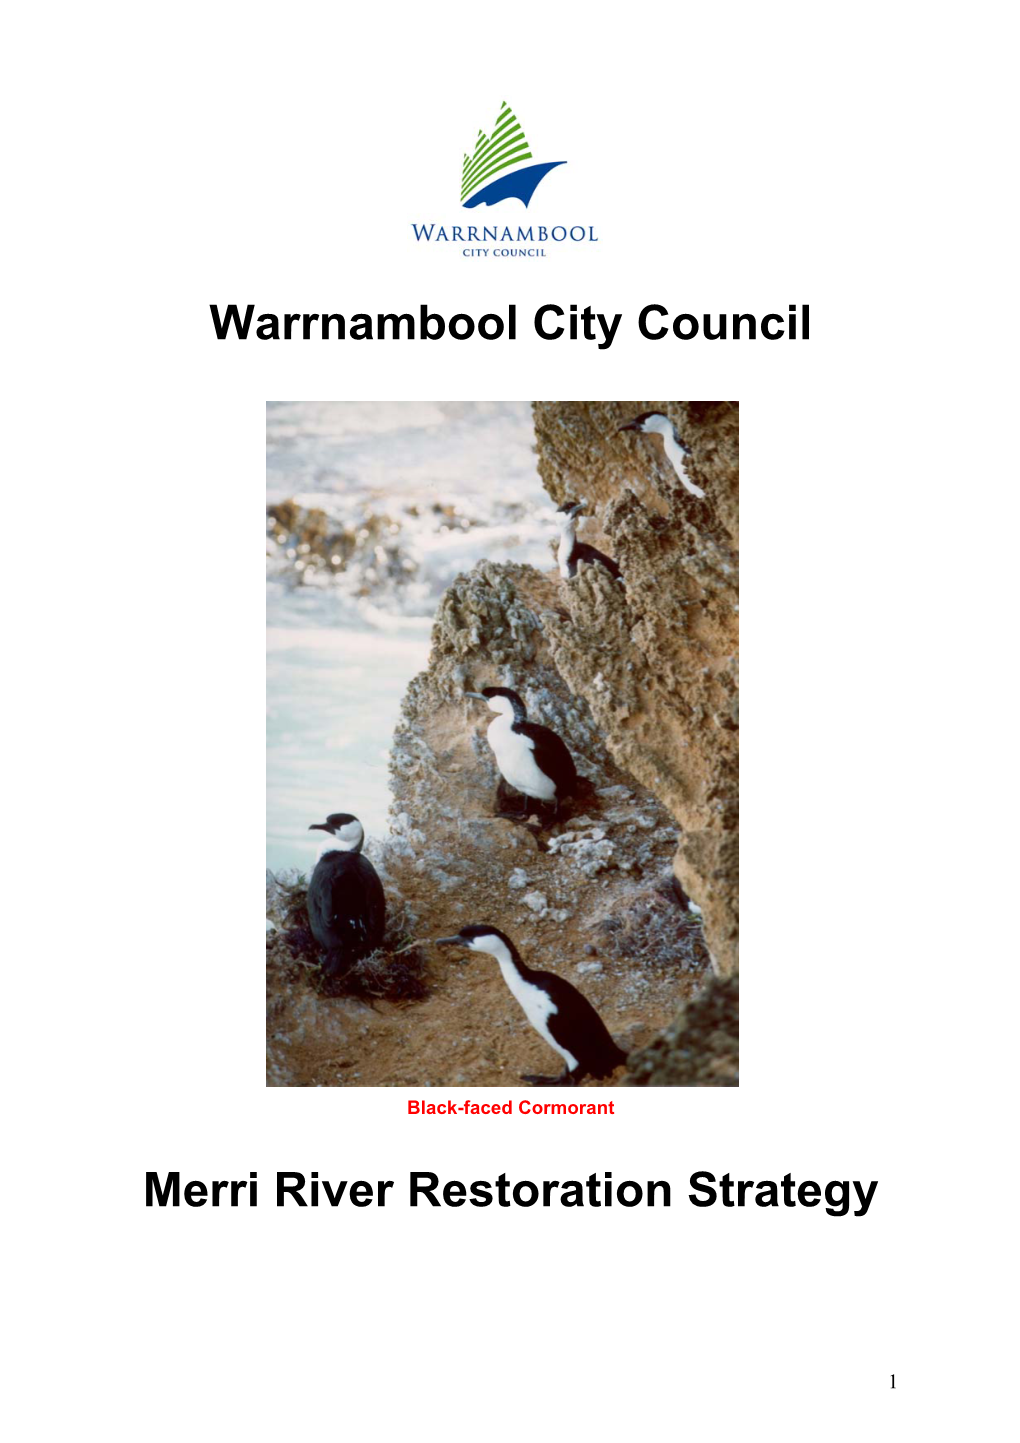 Merri River Restoration Strategy